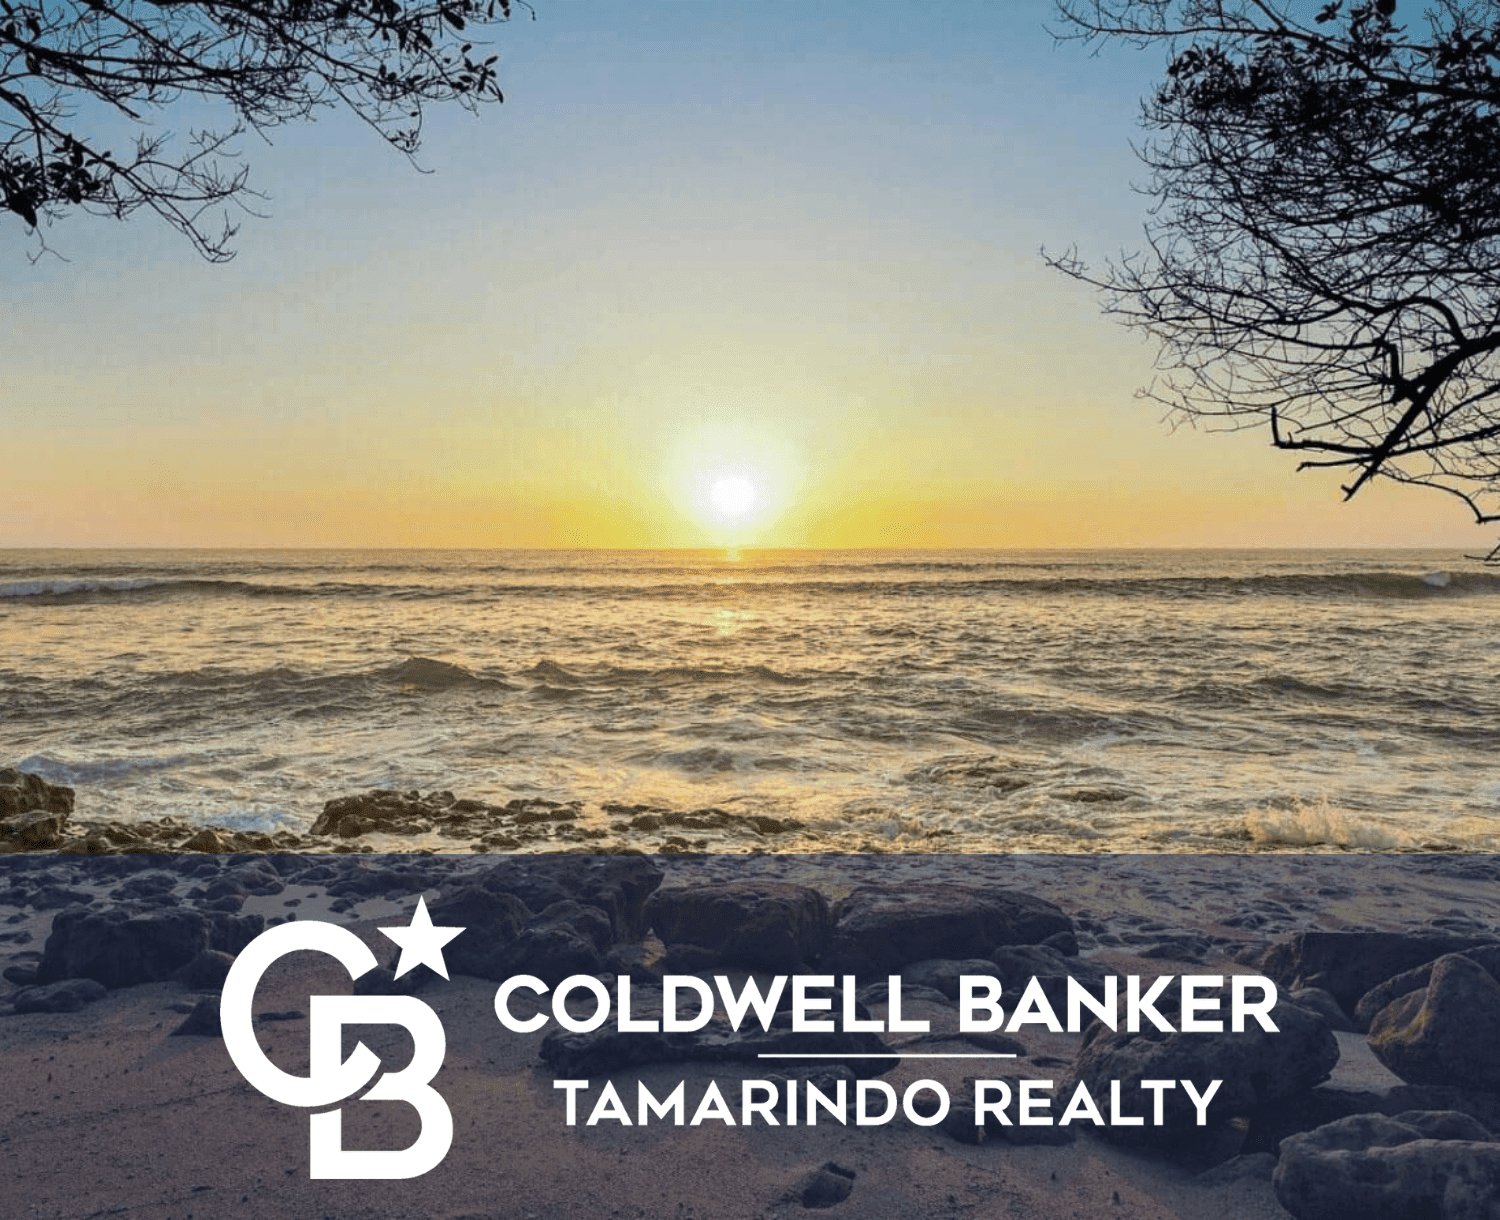 Coldwell Banker Tamarindo Realty